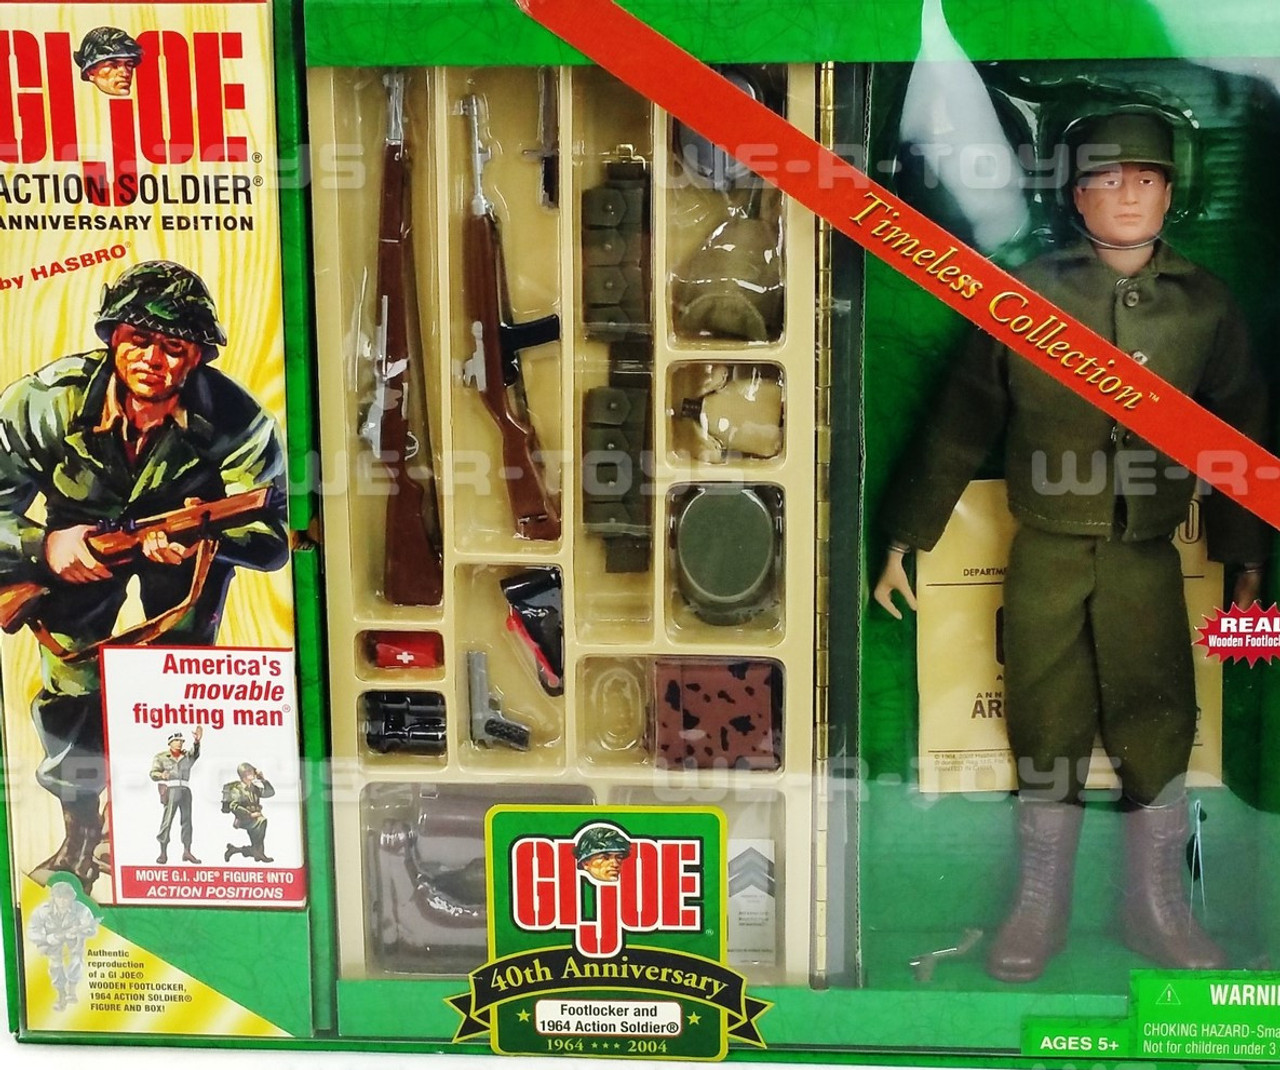 G.I. Joe 40th Anniversary Footlocker and 1964 Action Soldier Reproduction  2003